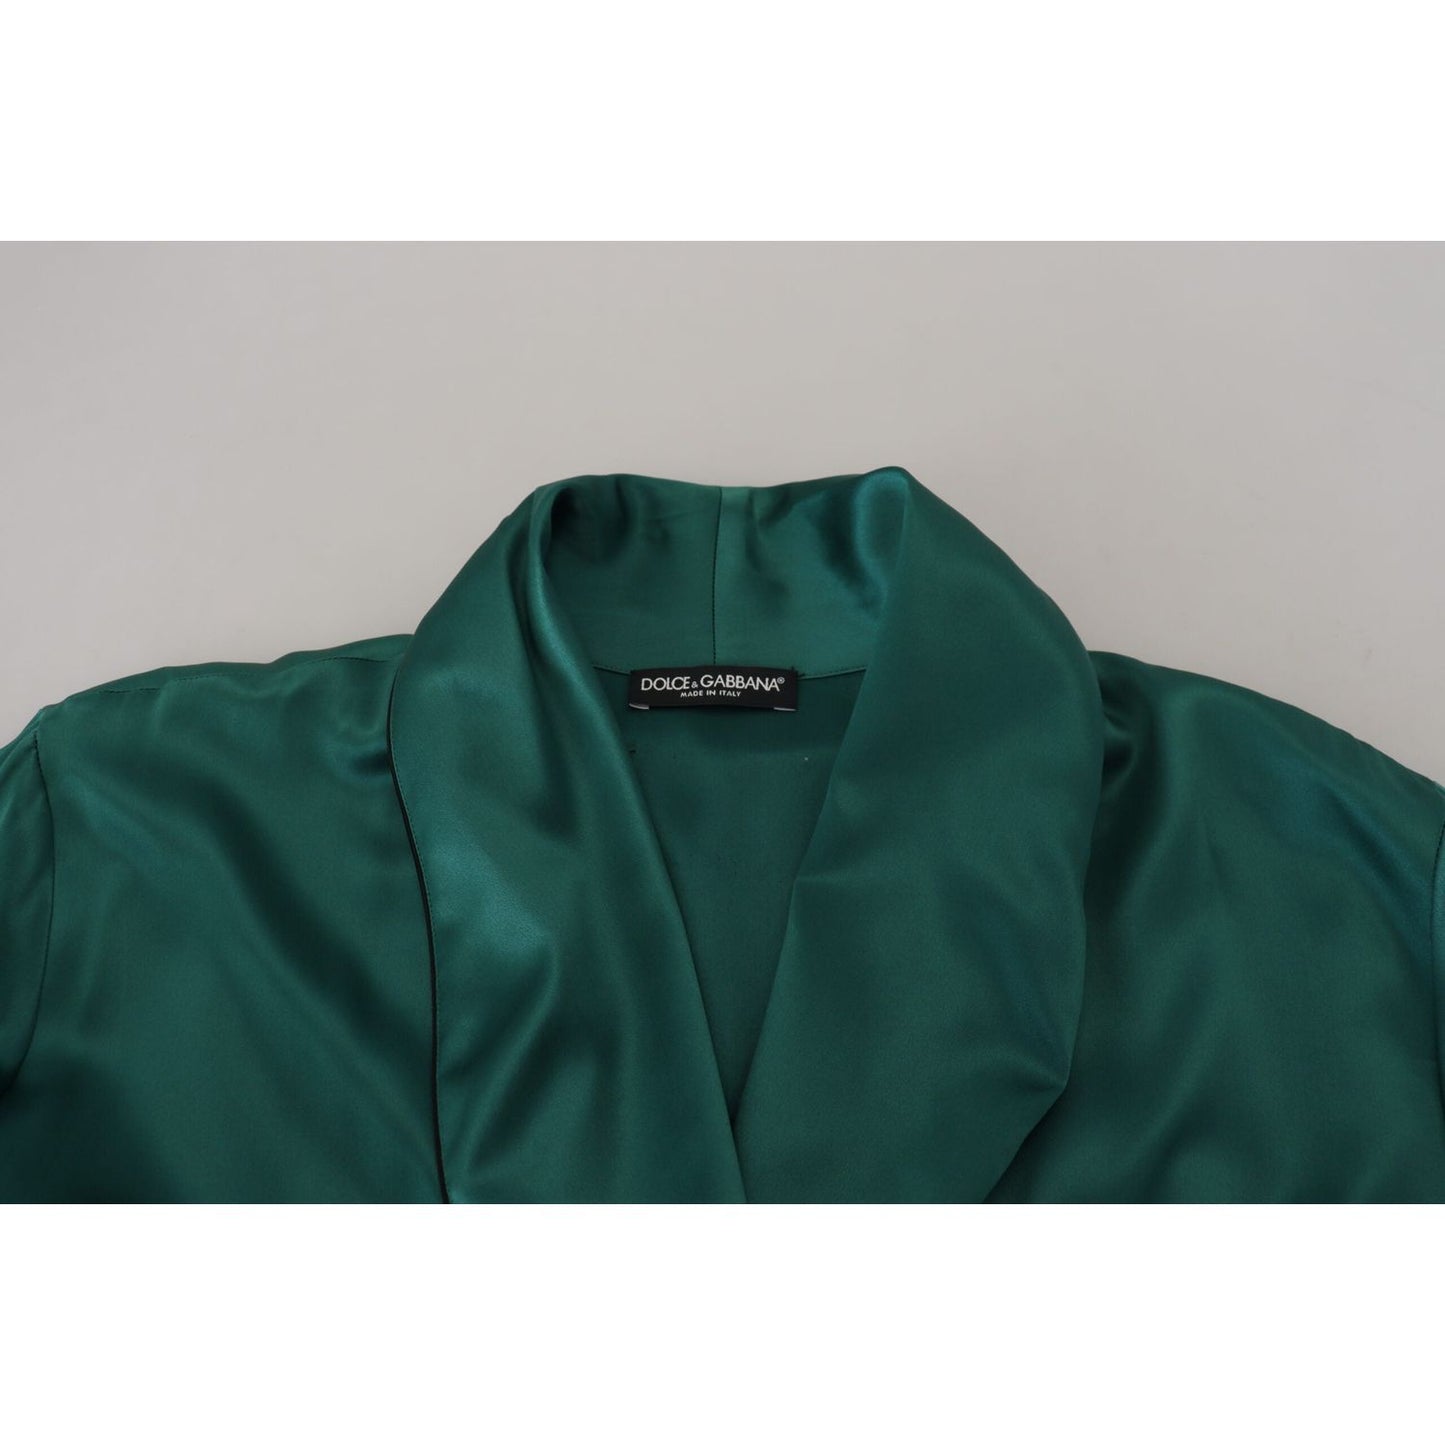 Dolce & Gabbana Elegant Silk Robe in Lush Green green-silk-waist-belt-robe-sleepwear IMG_4012-scaled-530c360c-af3.jpg